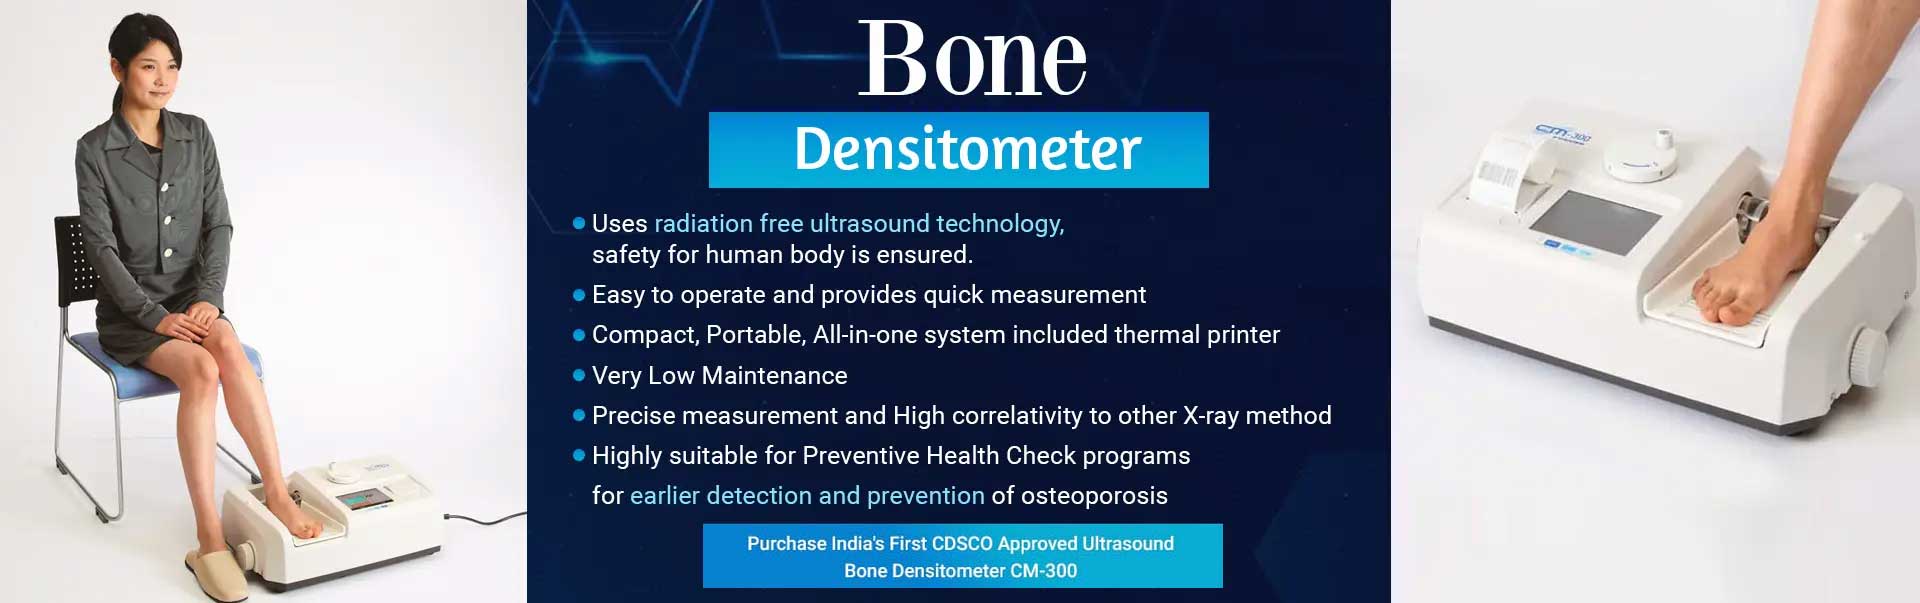 Bone Densitometer Manufacturers in Jaipur